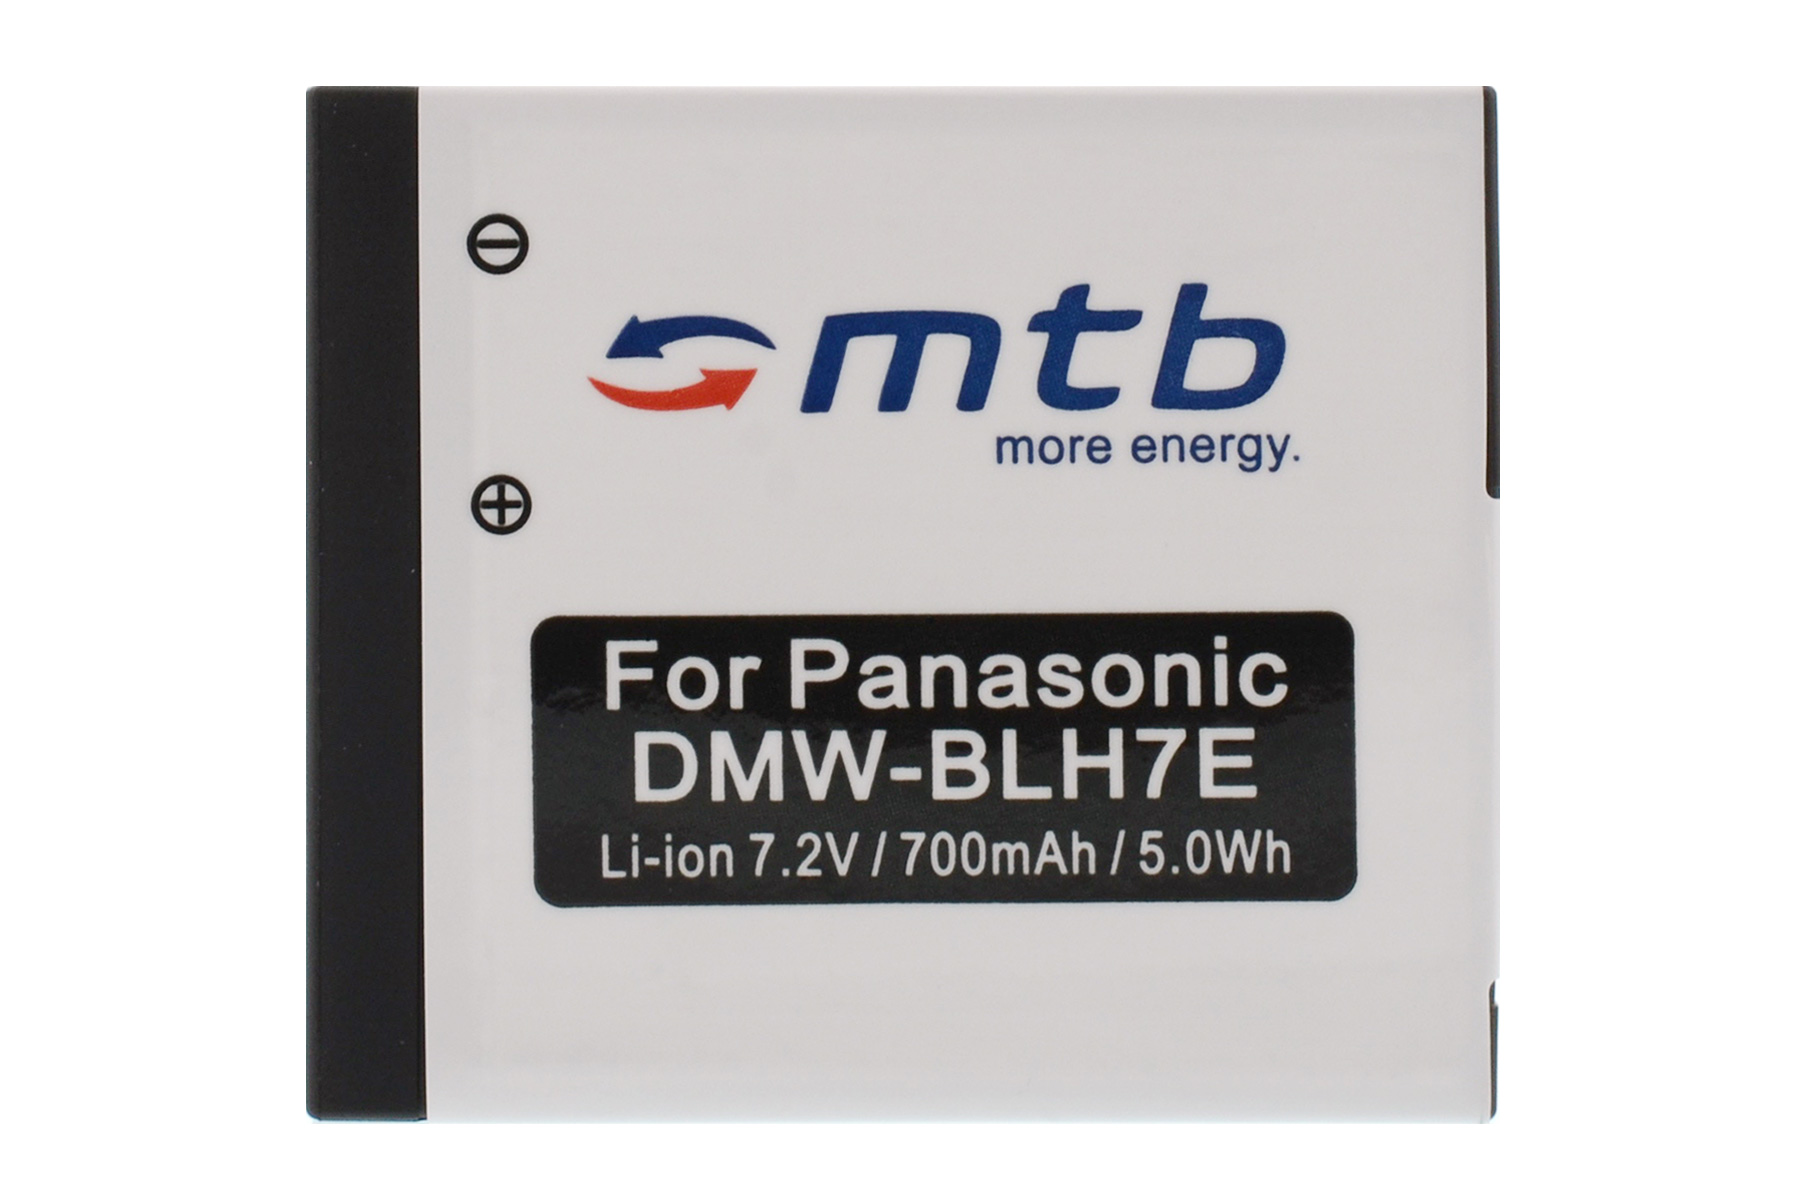 MTB mAh 700 BAT-409 Li-Ion, ENERGY Akku, MORE DMW-BLH7